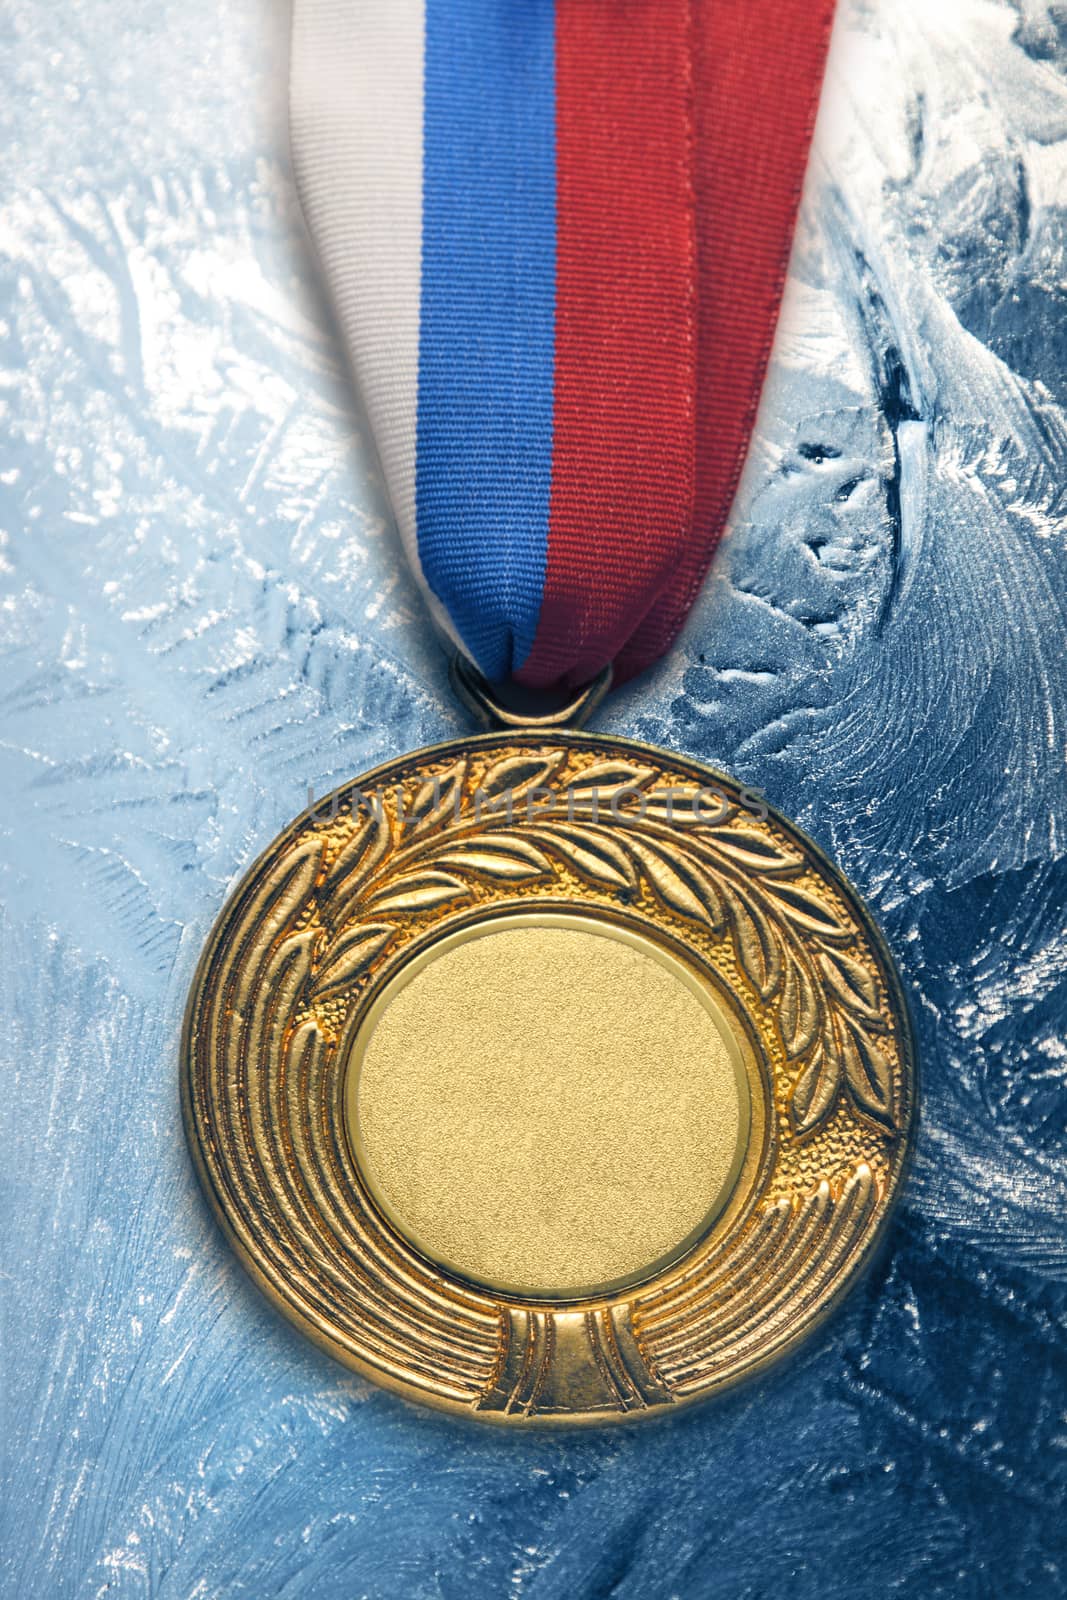 Metal medal on frozen background